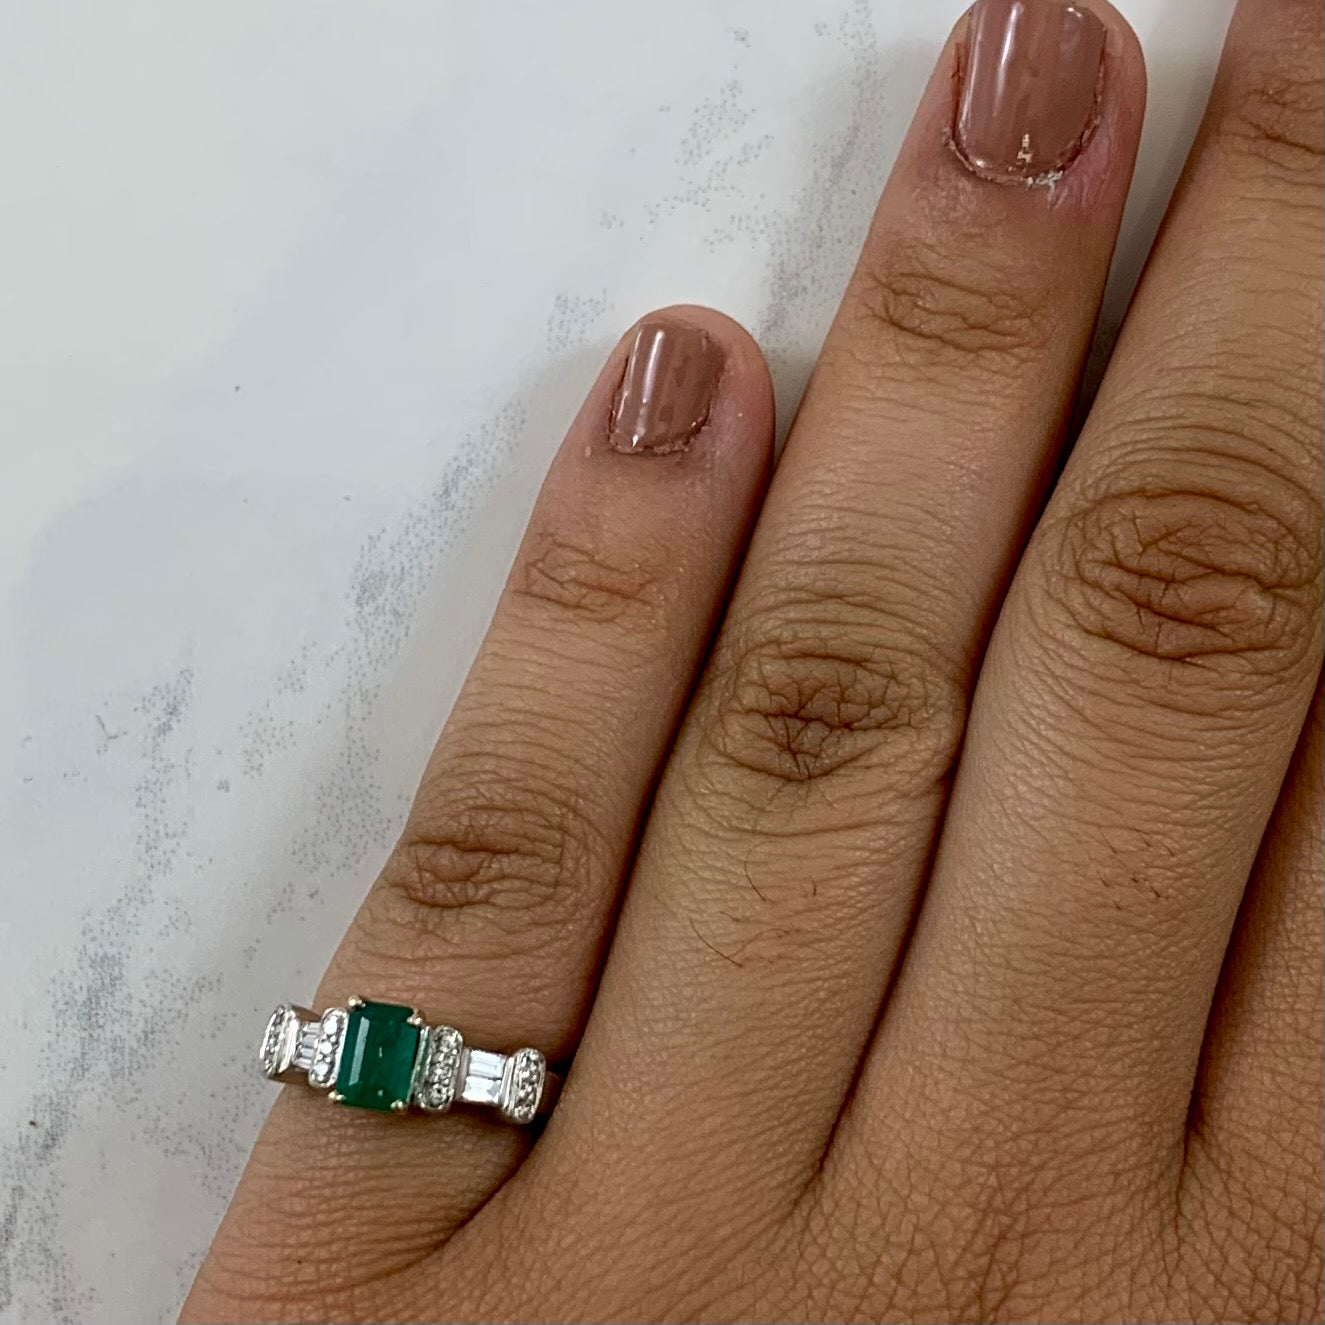 Emerald & Diamond Engagement Ring | 0.60ct, 0.16ctw | SZ 3.75 |